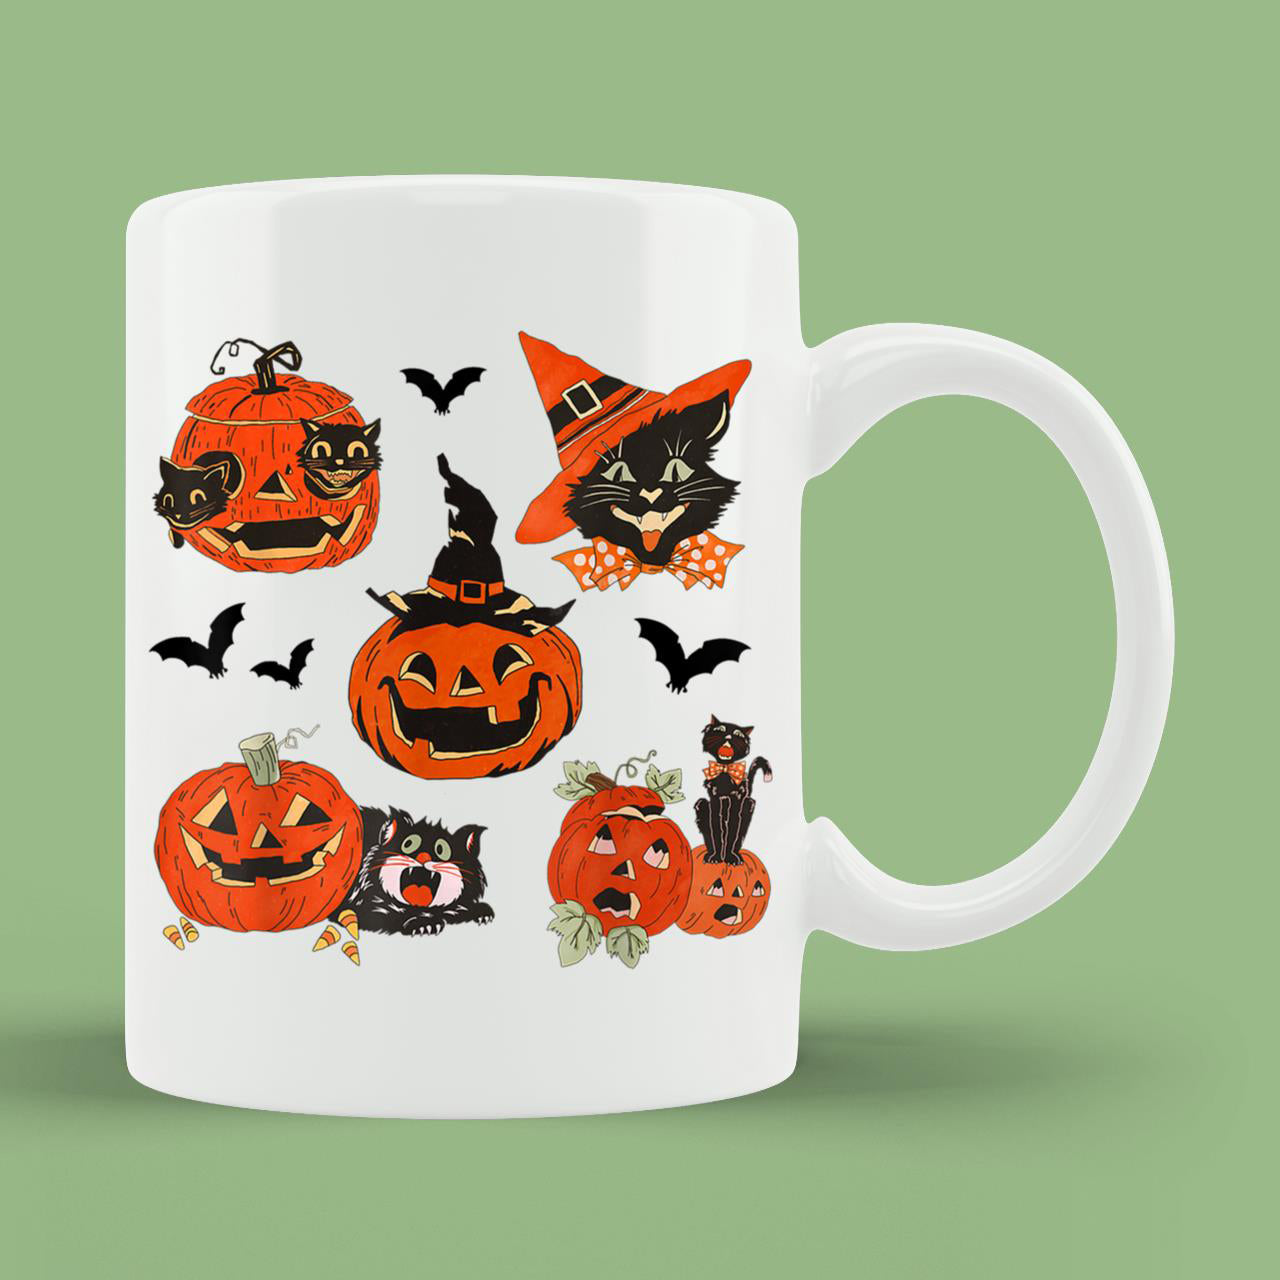 Skitongift Ceramic Novelty Coffee Mug Vintage Spooky Halloween Retro Pumpkins Black Cats Mug